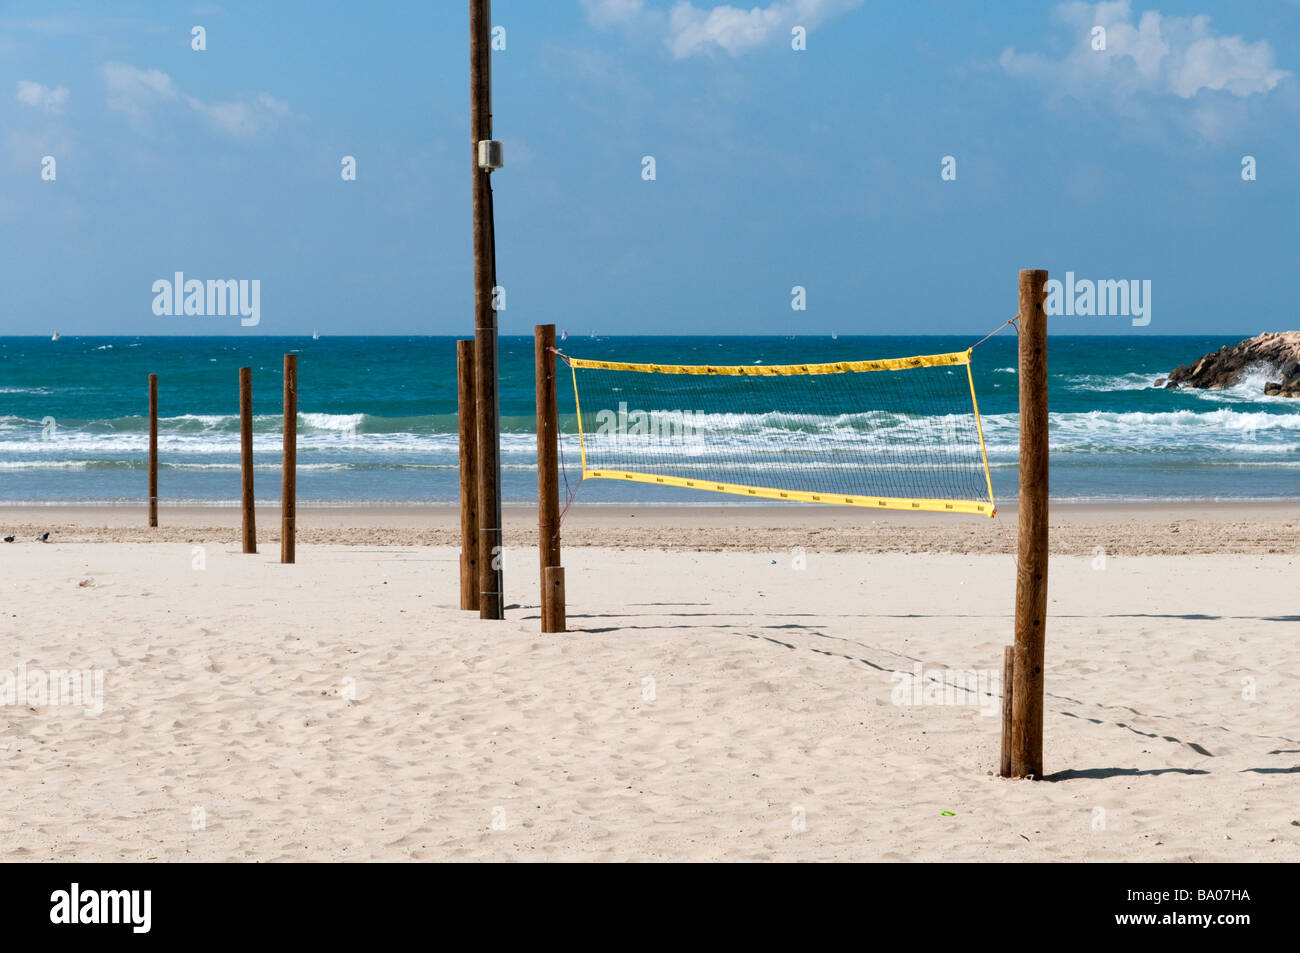 Filet de volley-ball sur plage vide Tel Aviv, Israël Banque D'Images